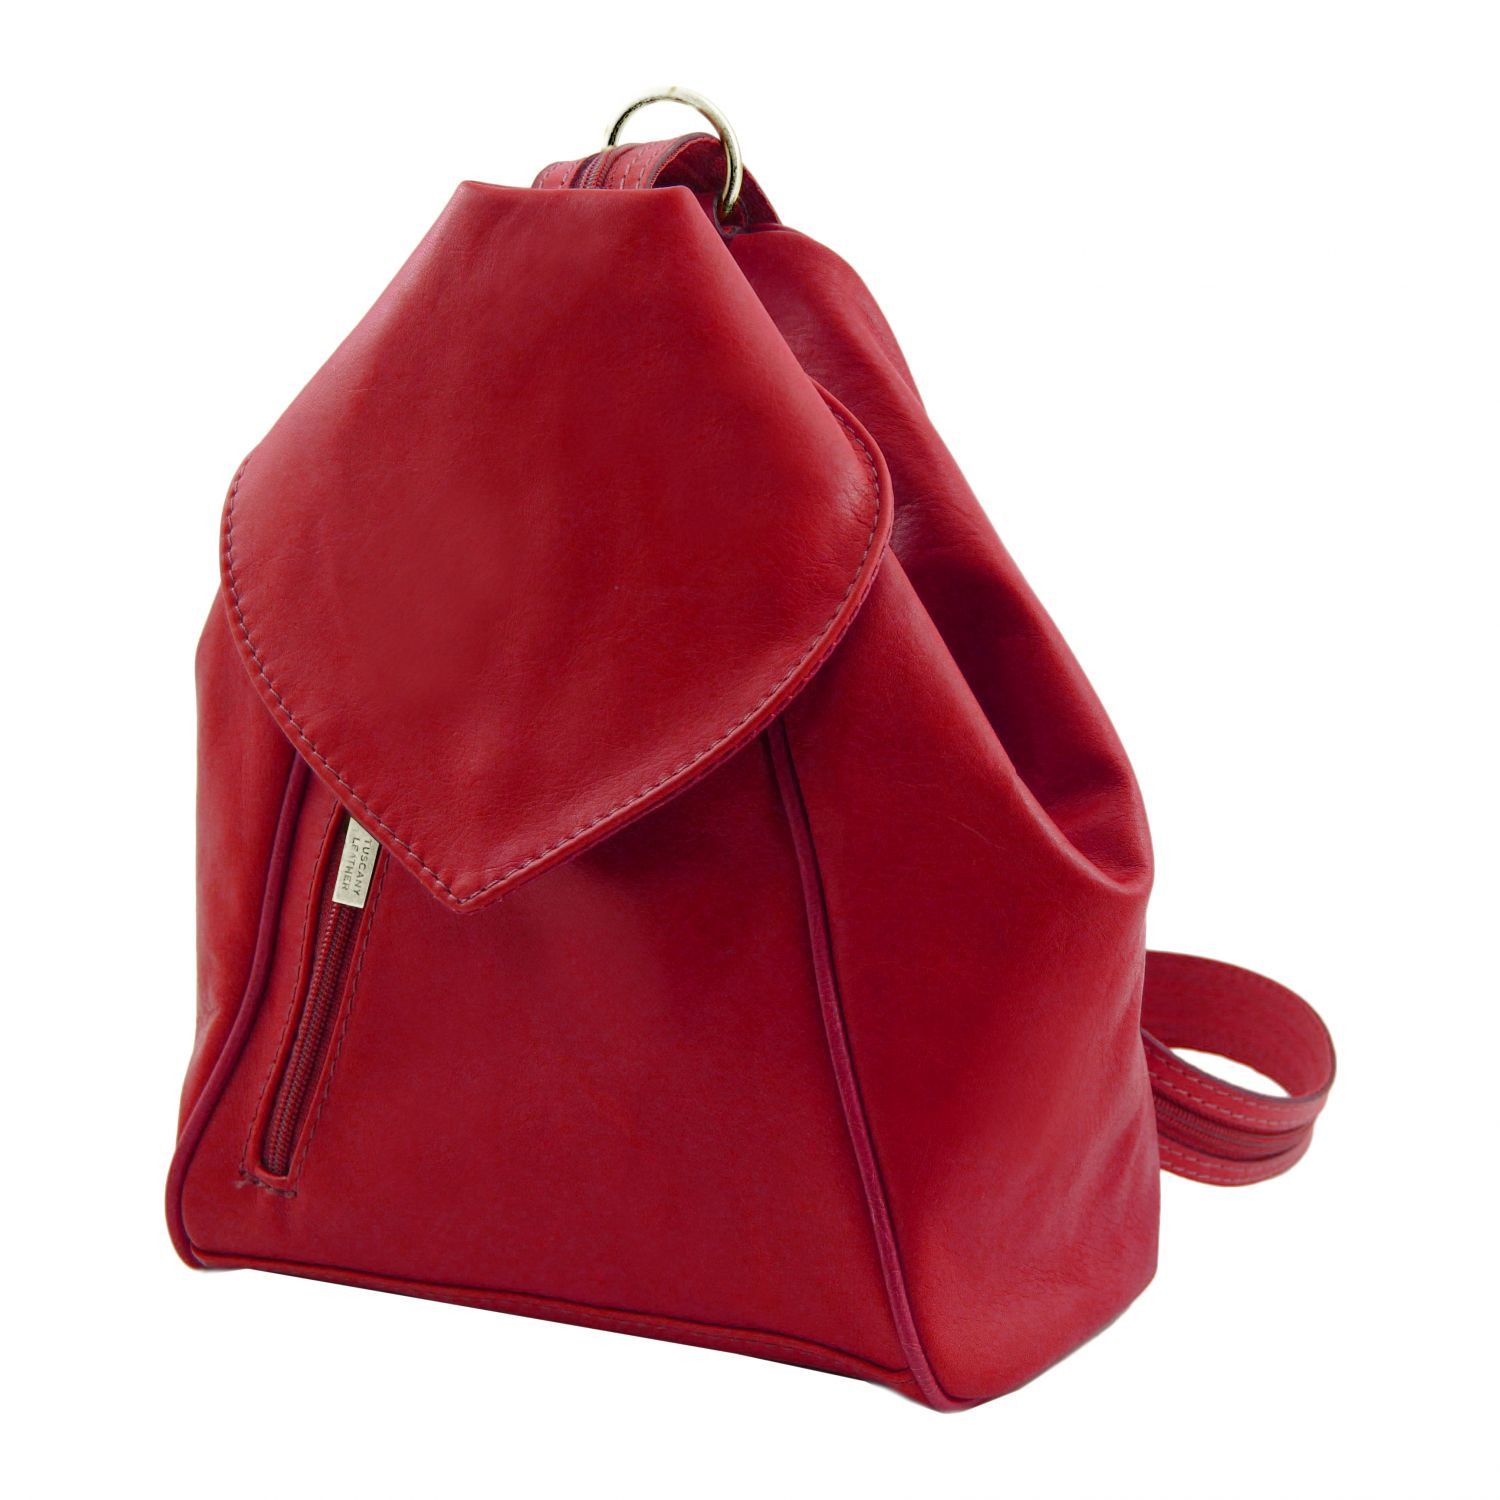 Delhi Leather Backpack Red TL140962